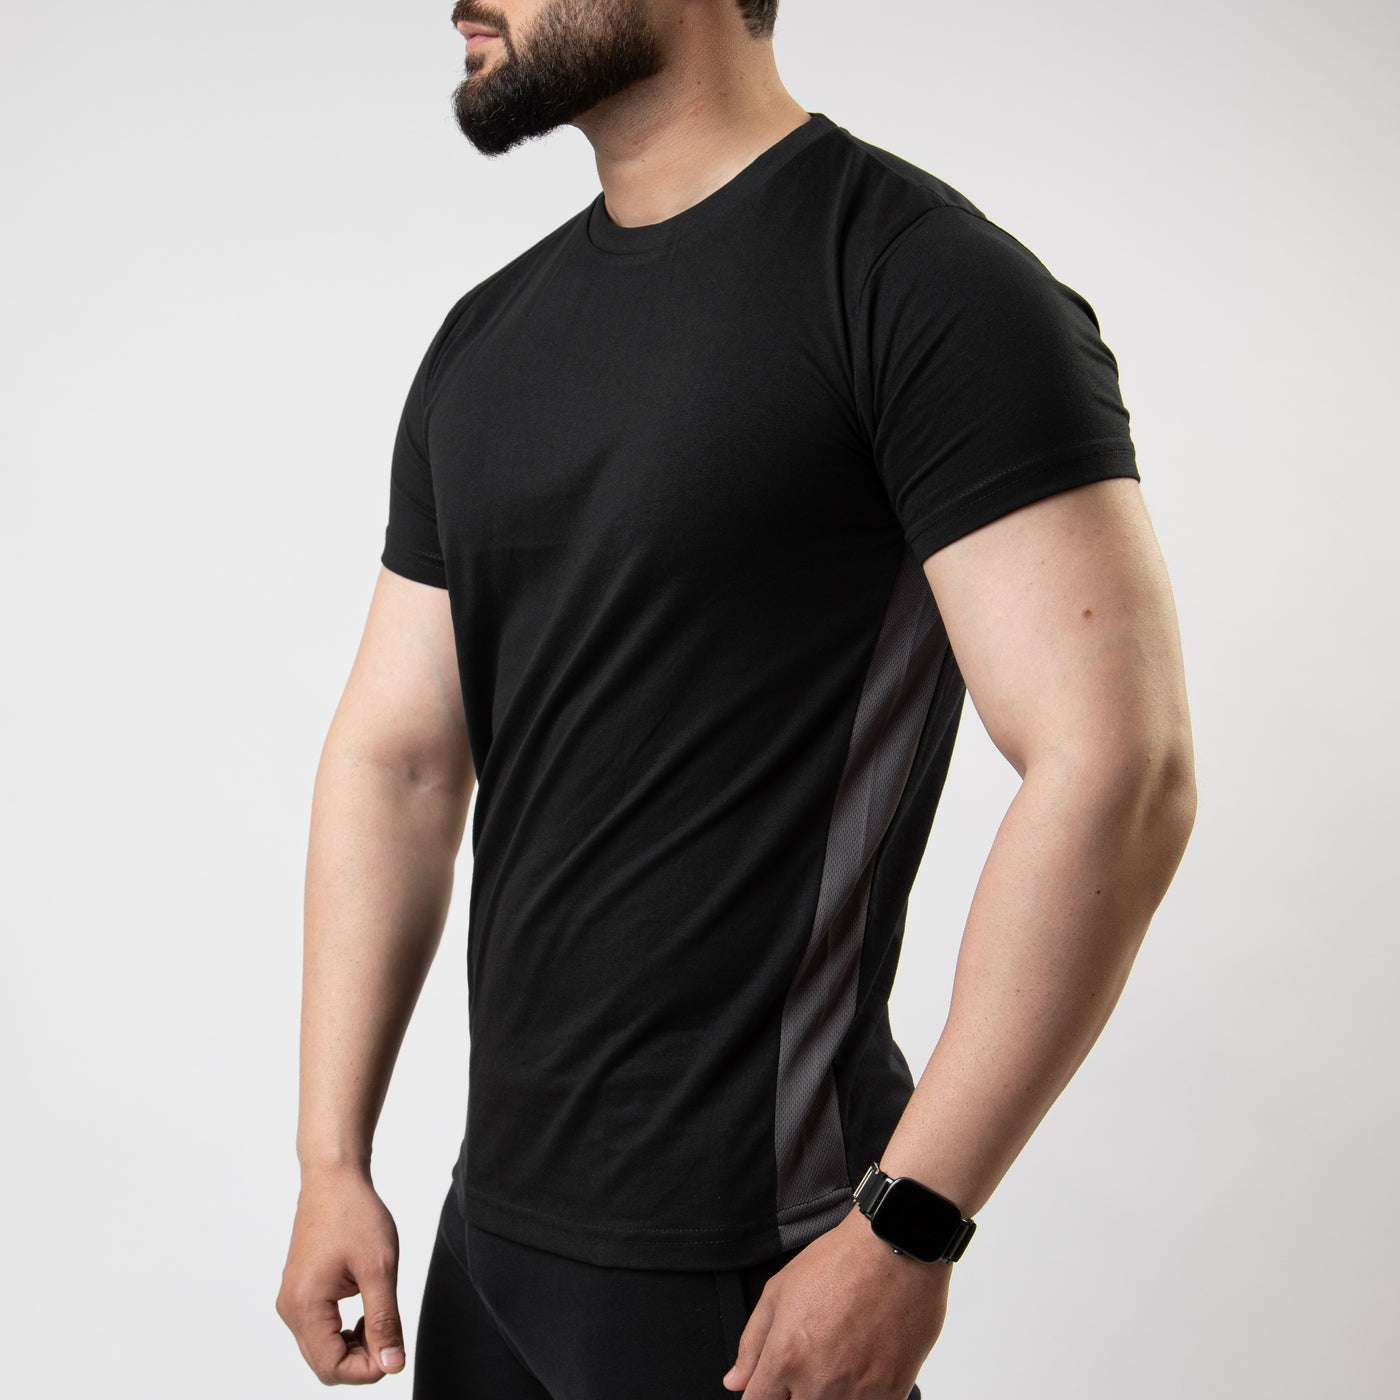 Black Hybrid T-Shirt with Gray Mesh Panel